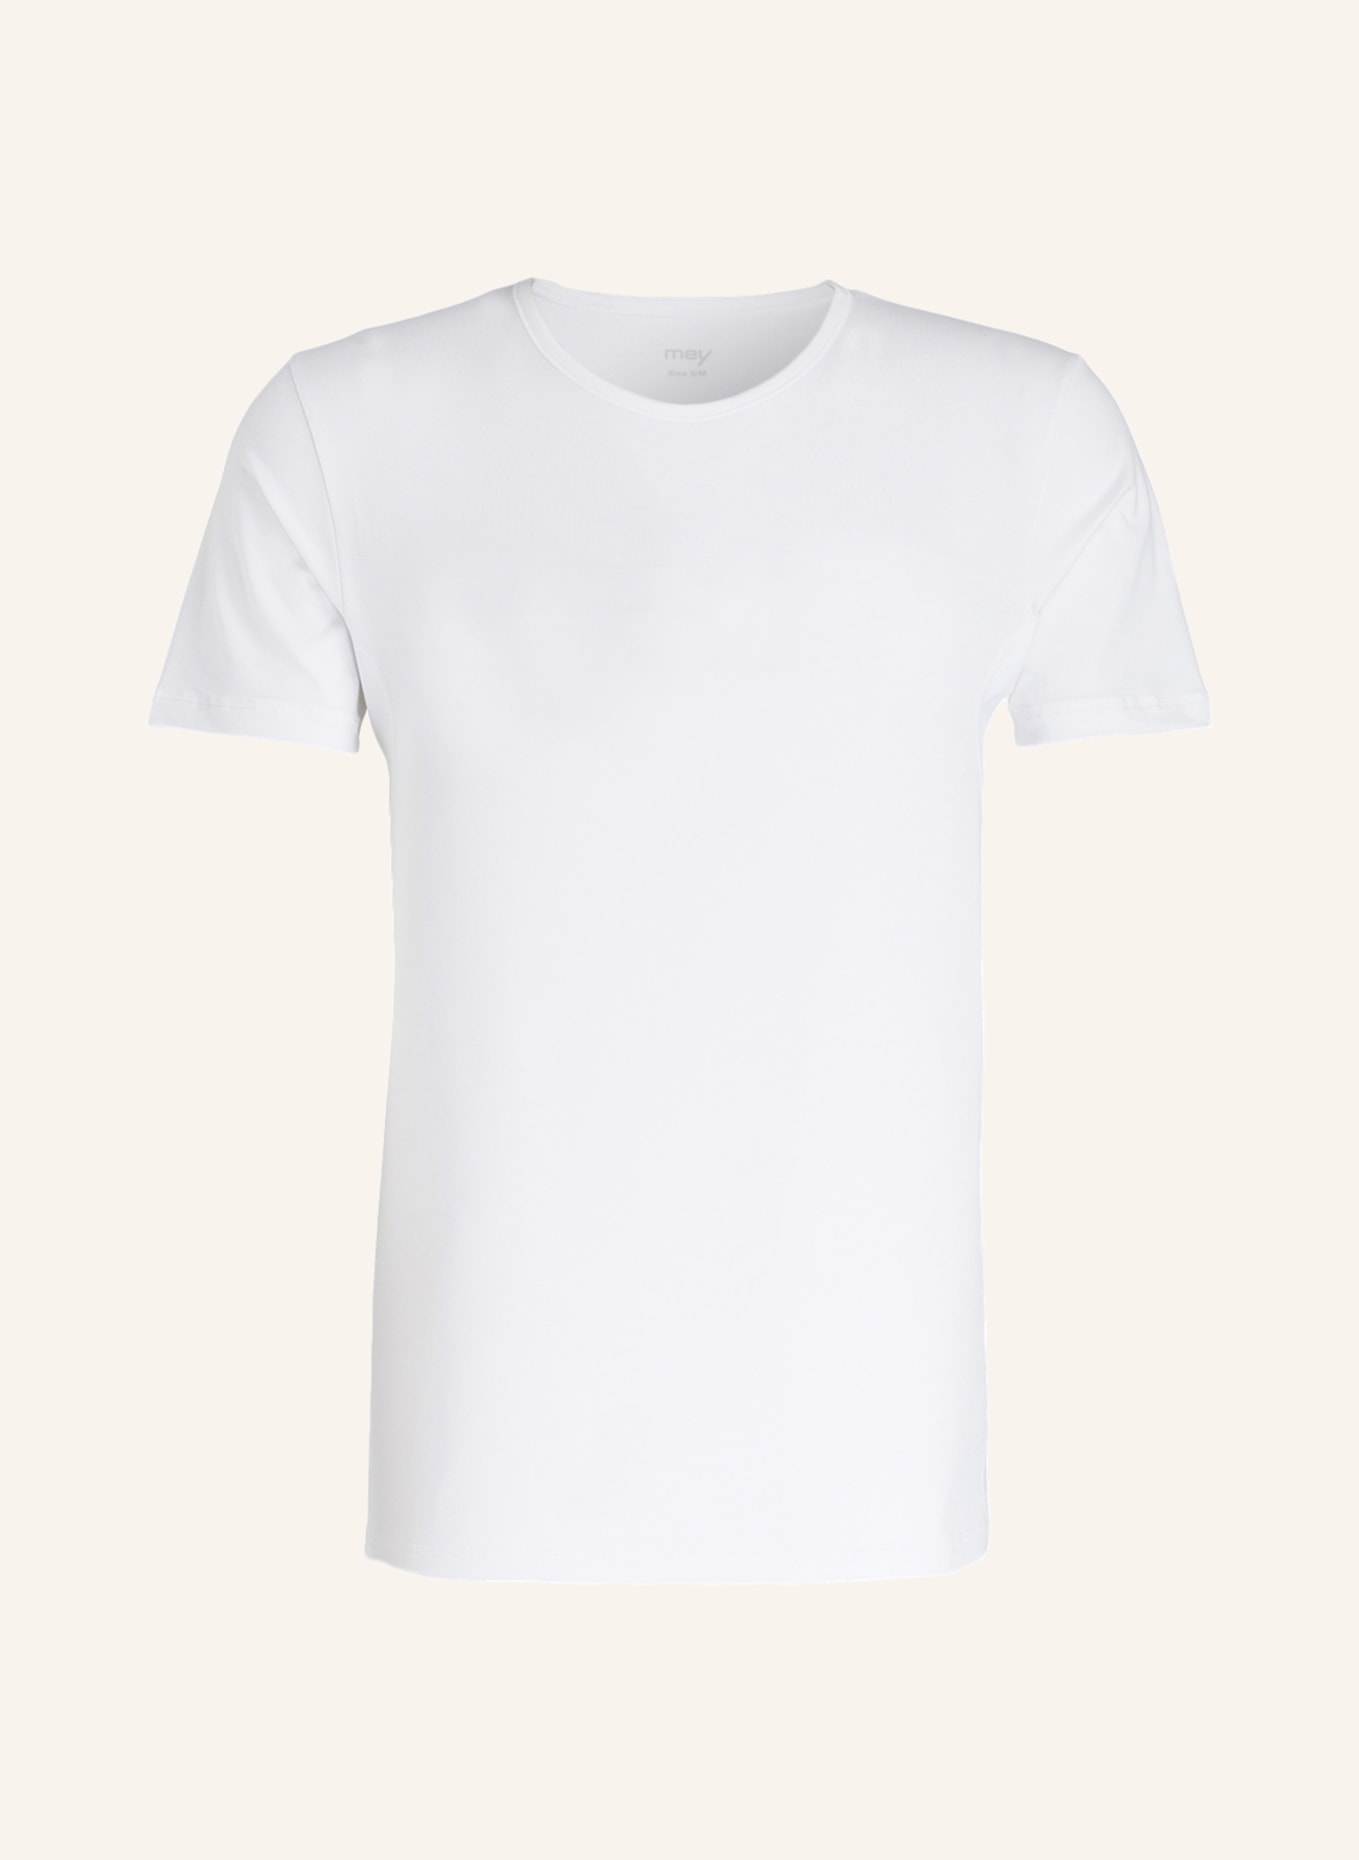 mey T-Shirt Serie DRY COTTON, Farbe: WEISS (Bild 1)